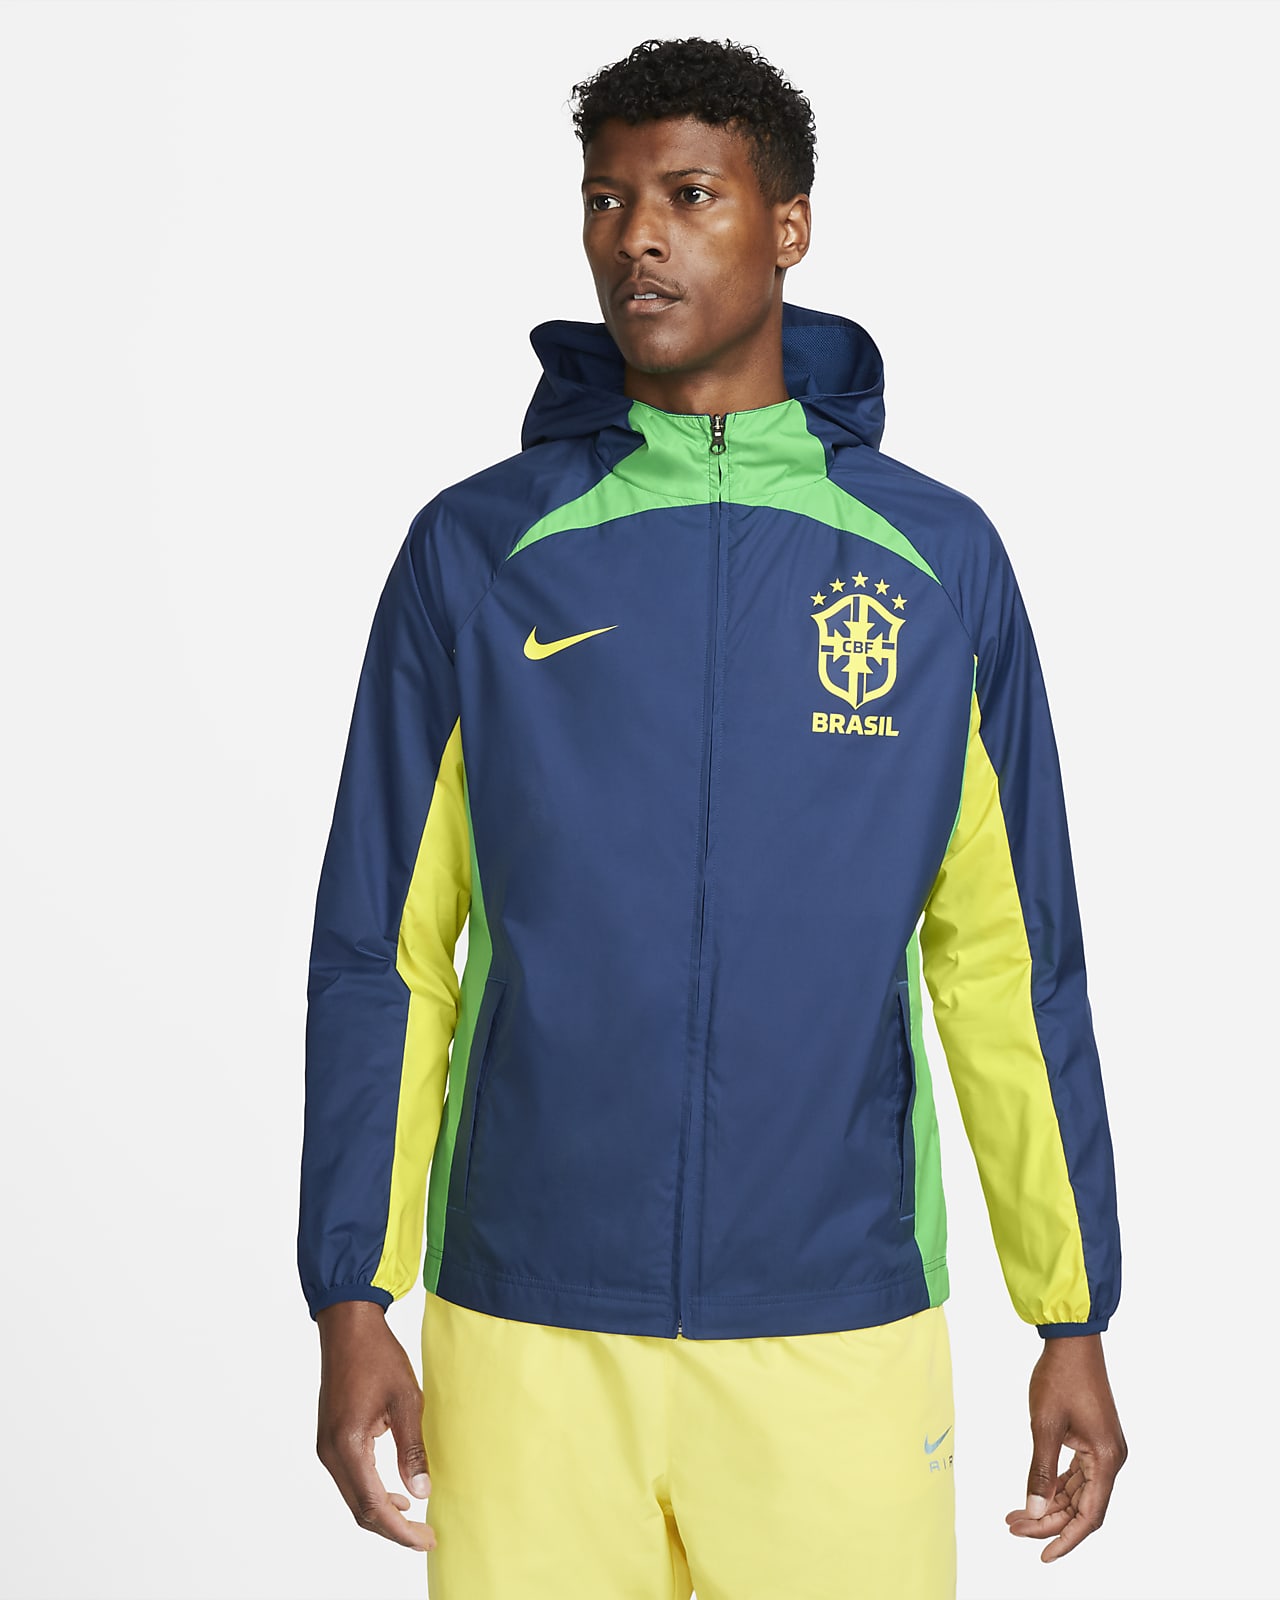 Brazil AWF Men's Full-Zip Football Jacket